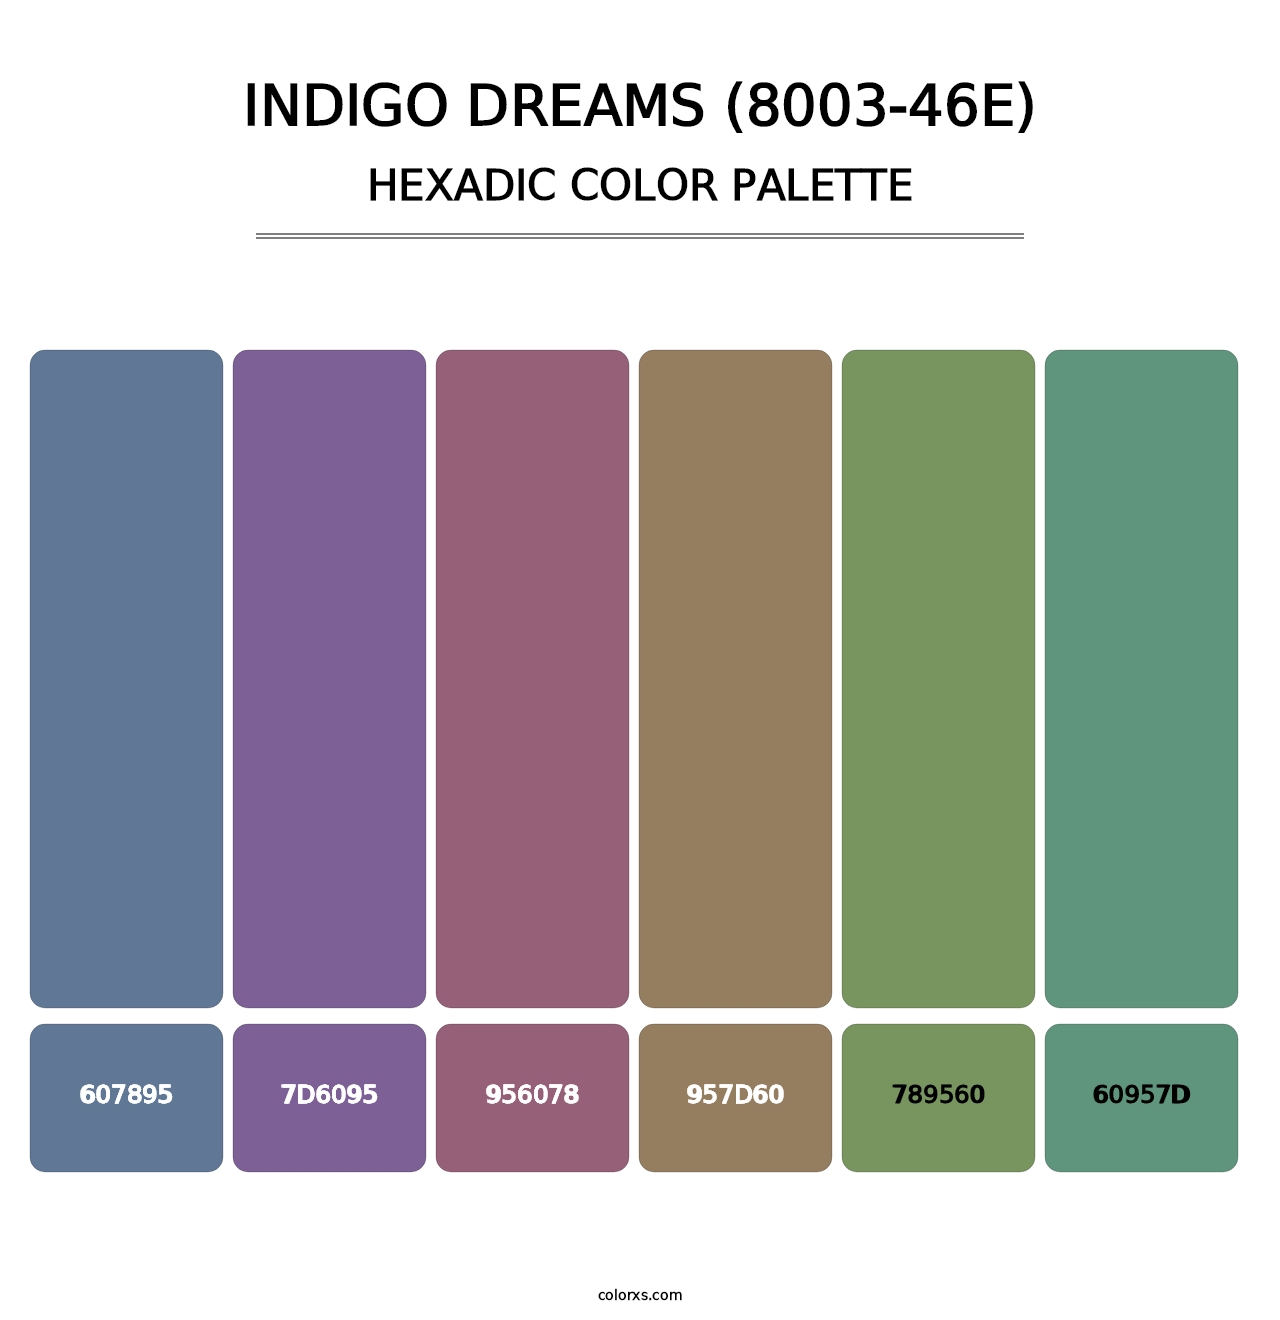 Indigo Dreams (8003-46E) - Hexadic Color Palette